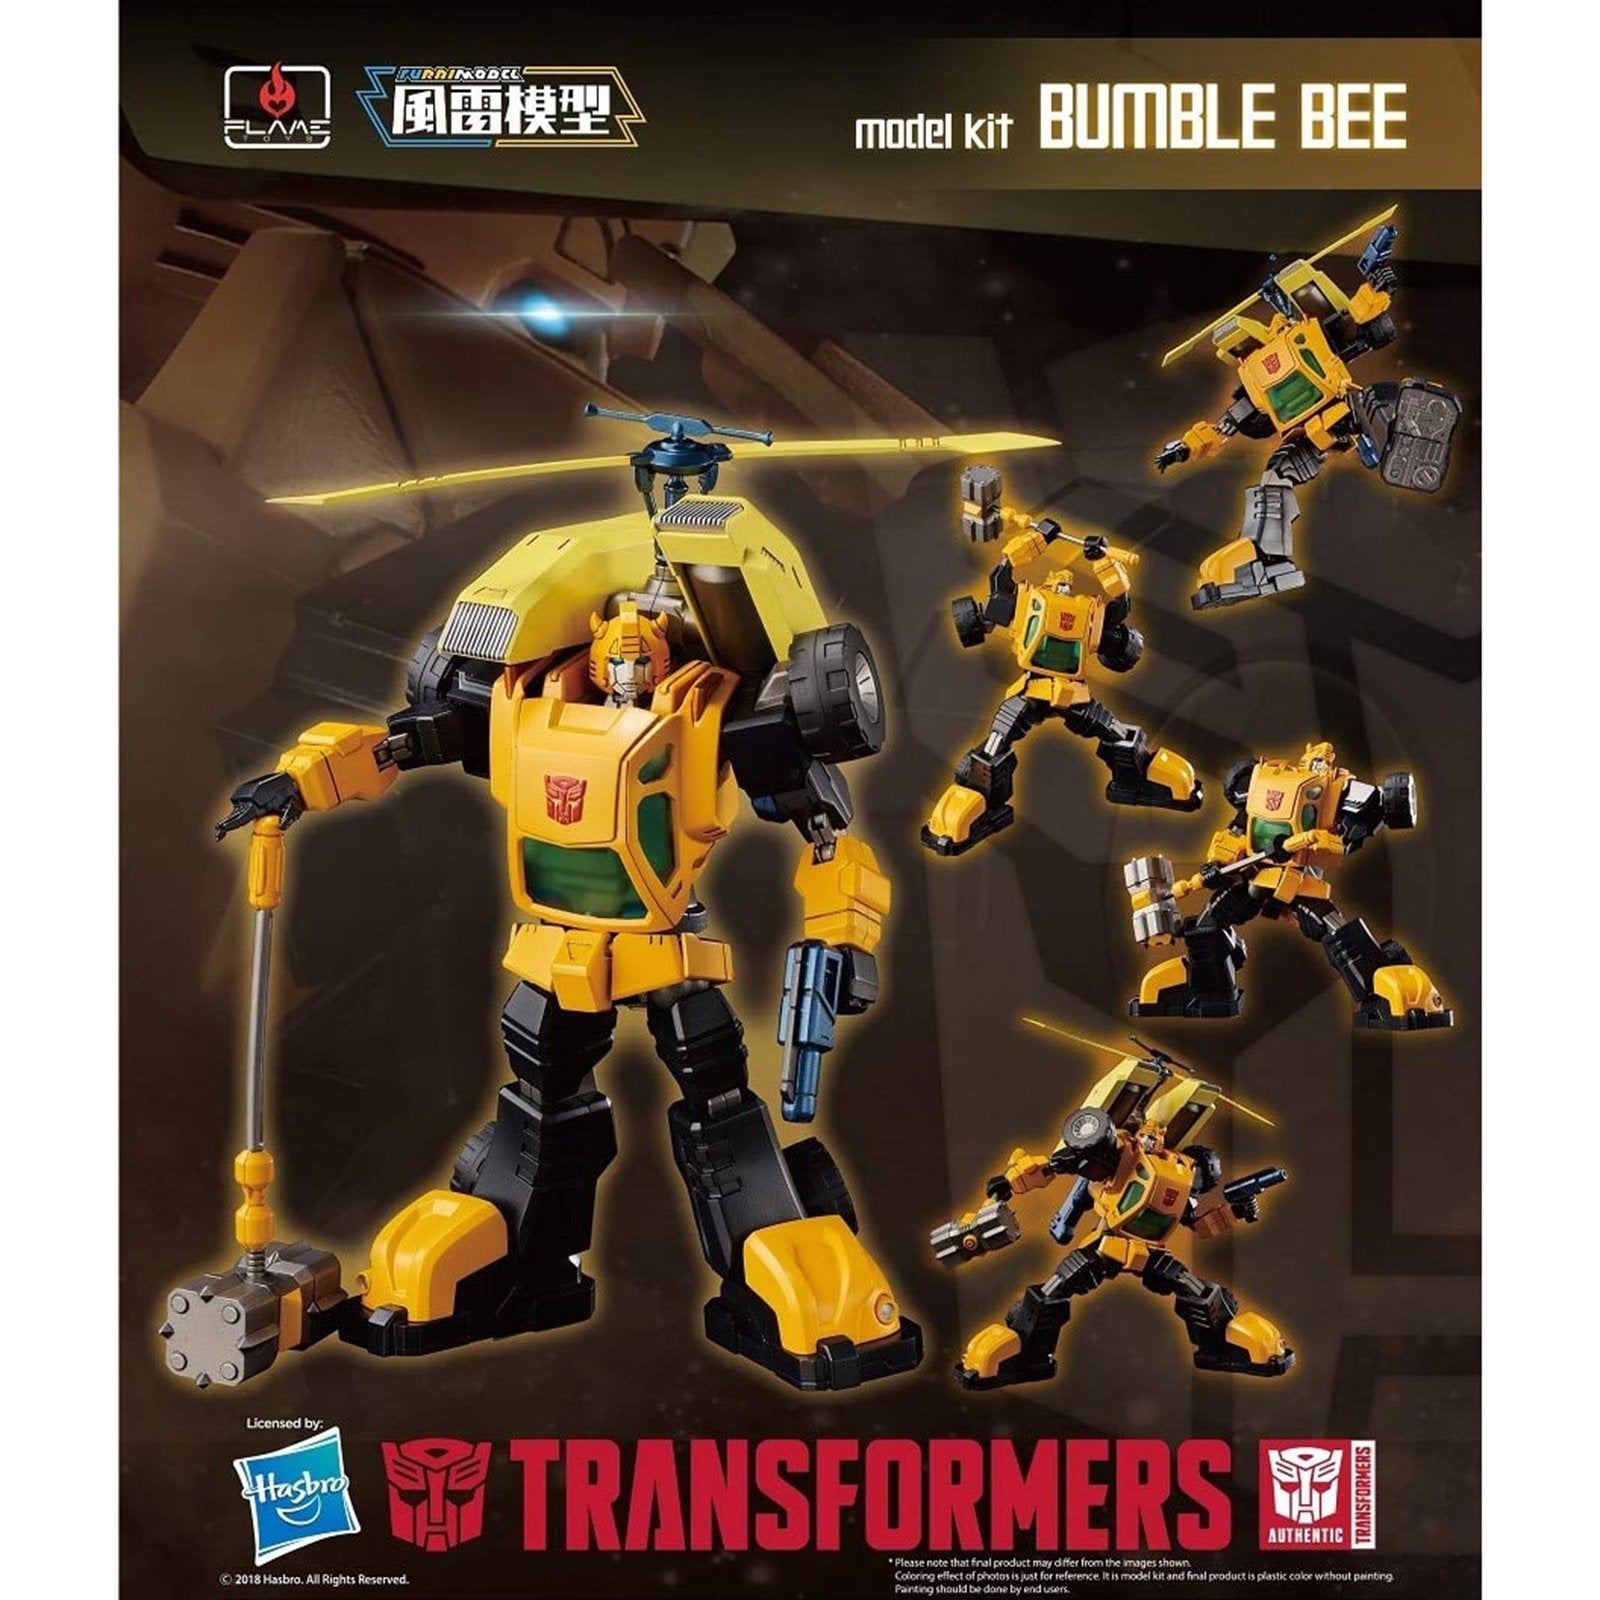 model kit transformers